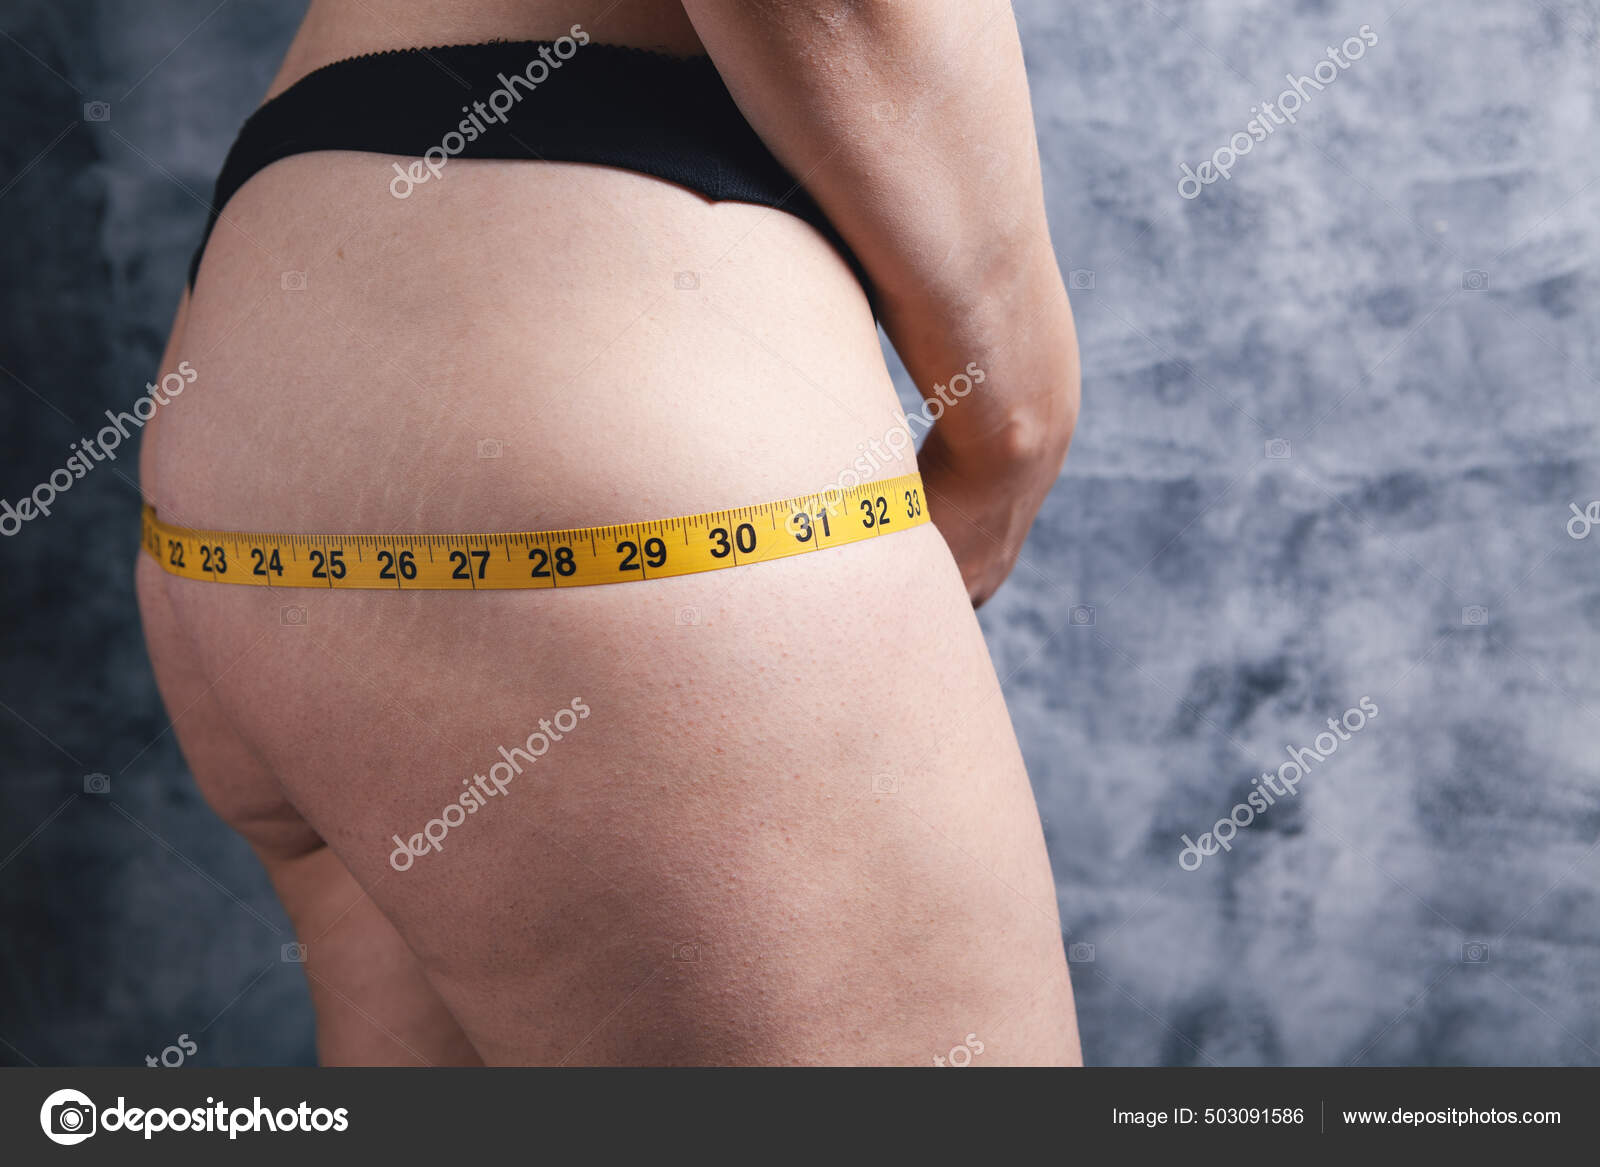 https://st2.depositphotos.com/7485446/50309/i/1600/depositphotos_503091586-stock-photo-young-girl-bras-measures-belly.jpg